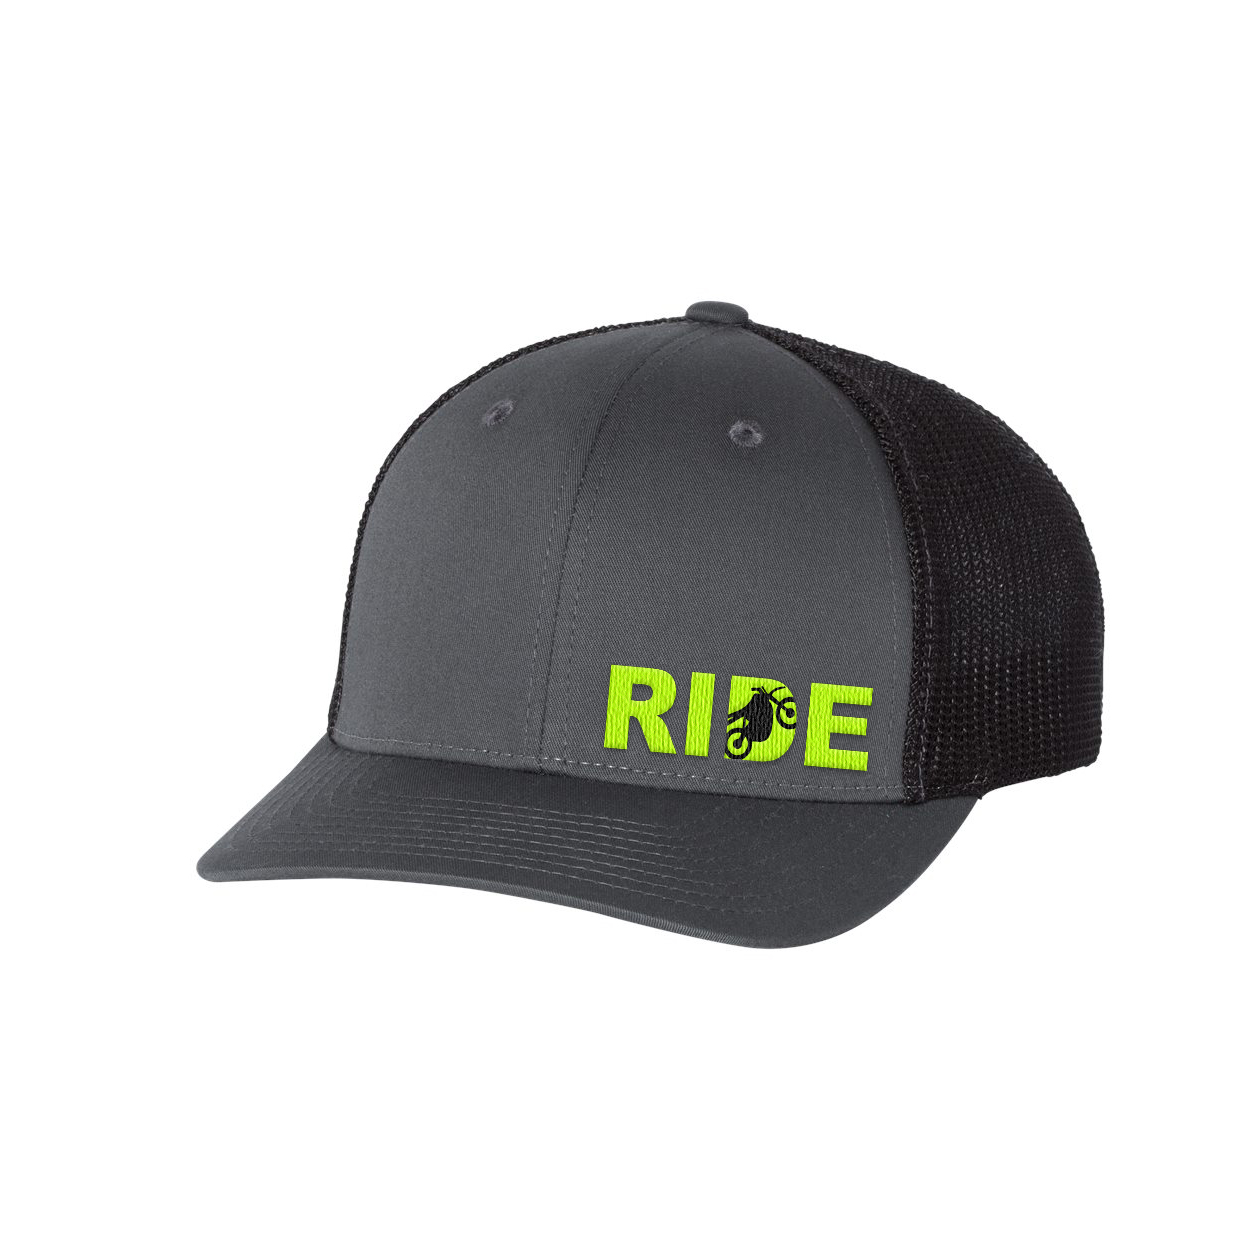 Ride Moto Logo Night Out Embroidered Snapback Trucker Hat Gray/Black/Hi-Vis